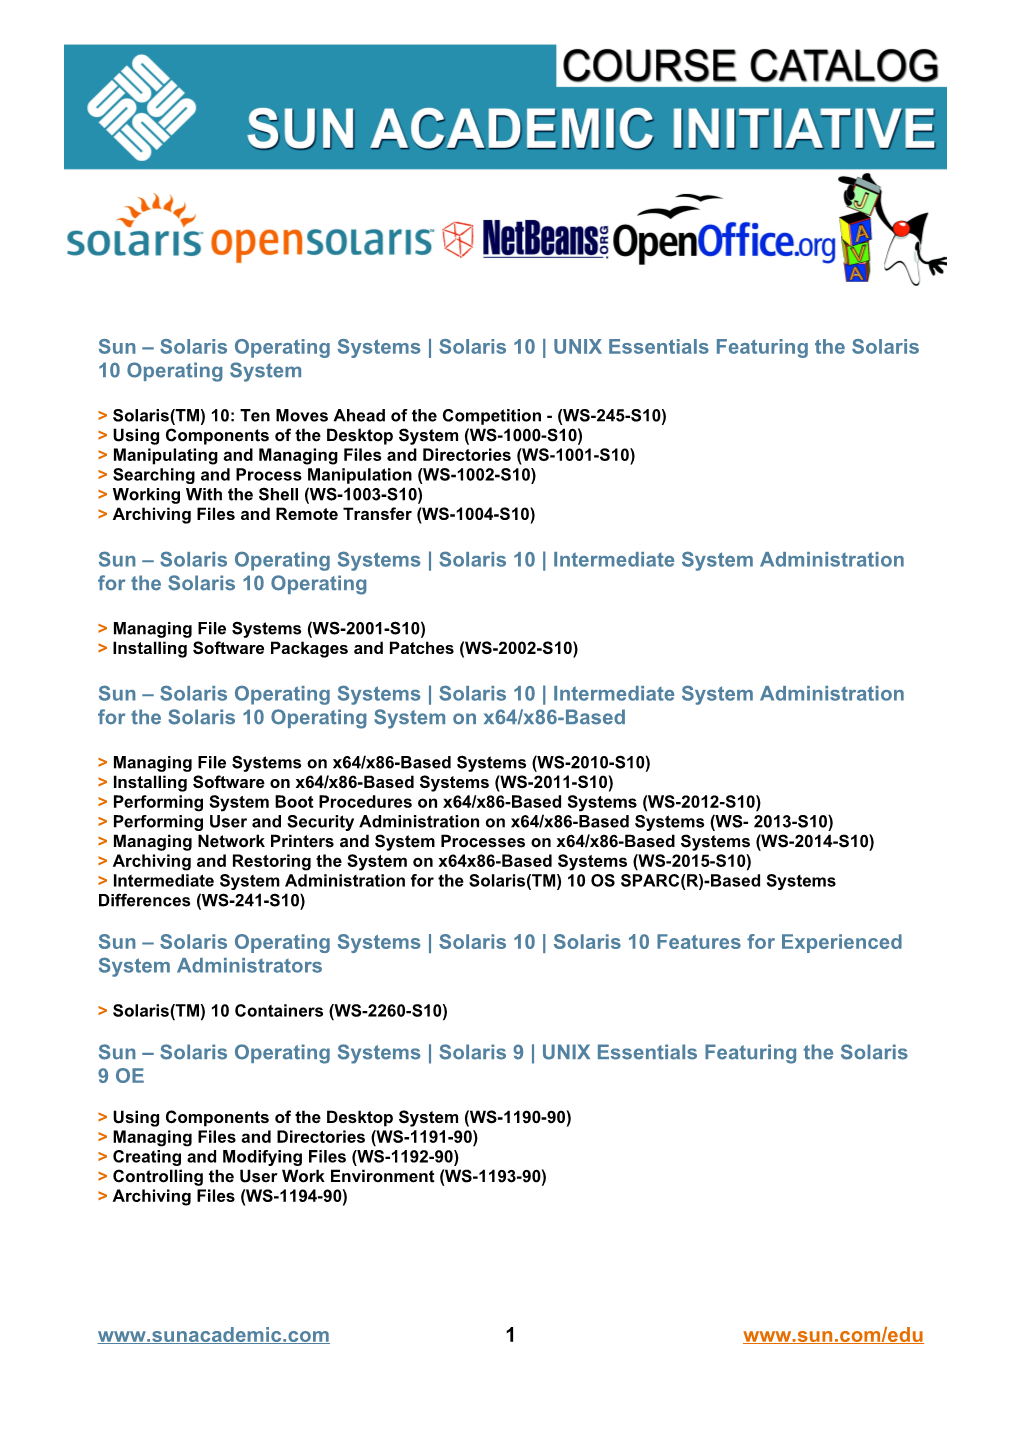 Solaris Operating Systems | Solaris 10 | UNIX Essentials Featuring the Solaris 10 Operating System